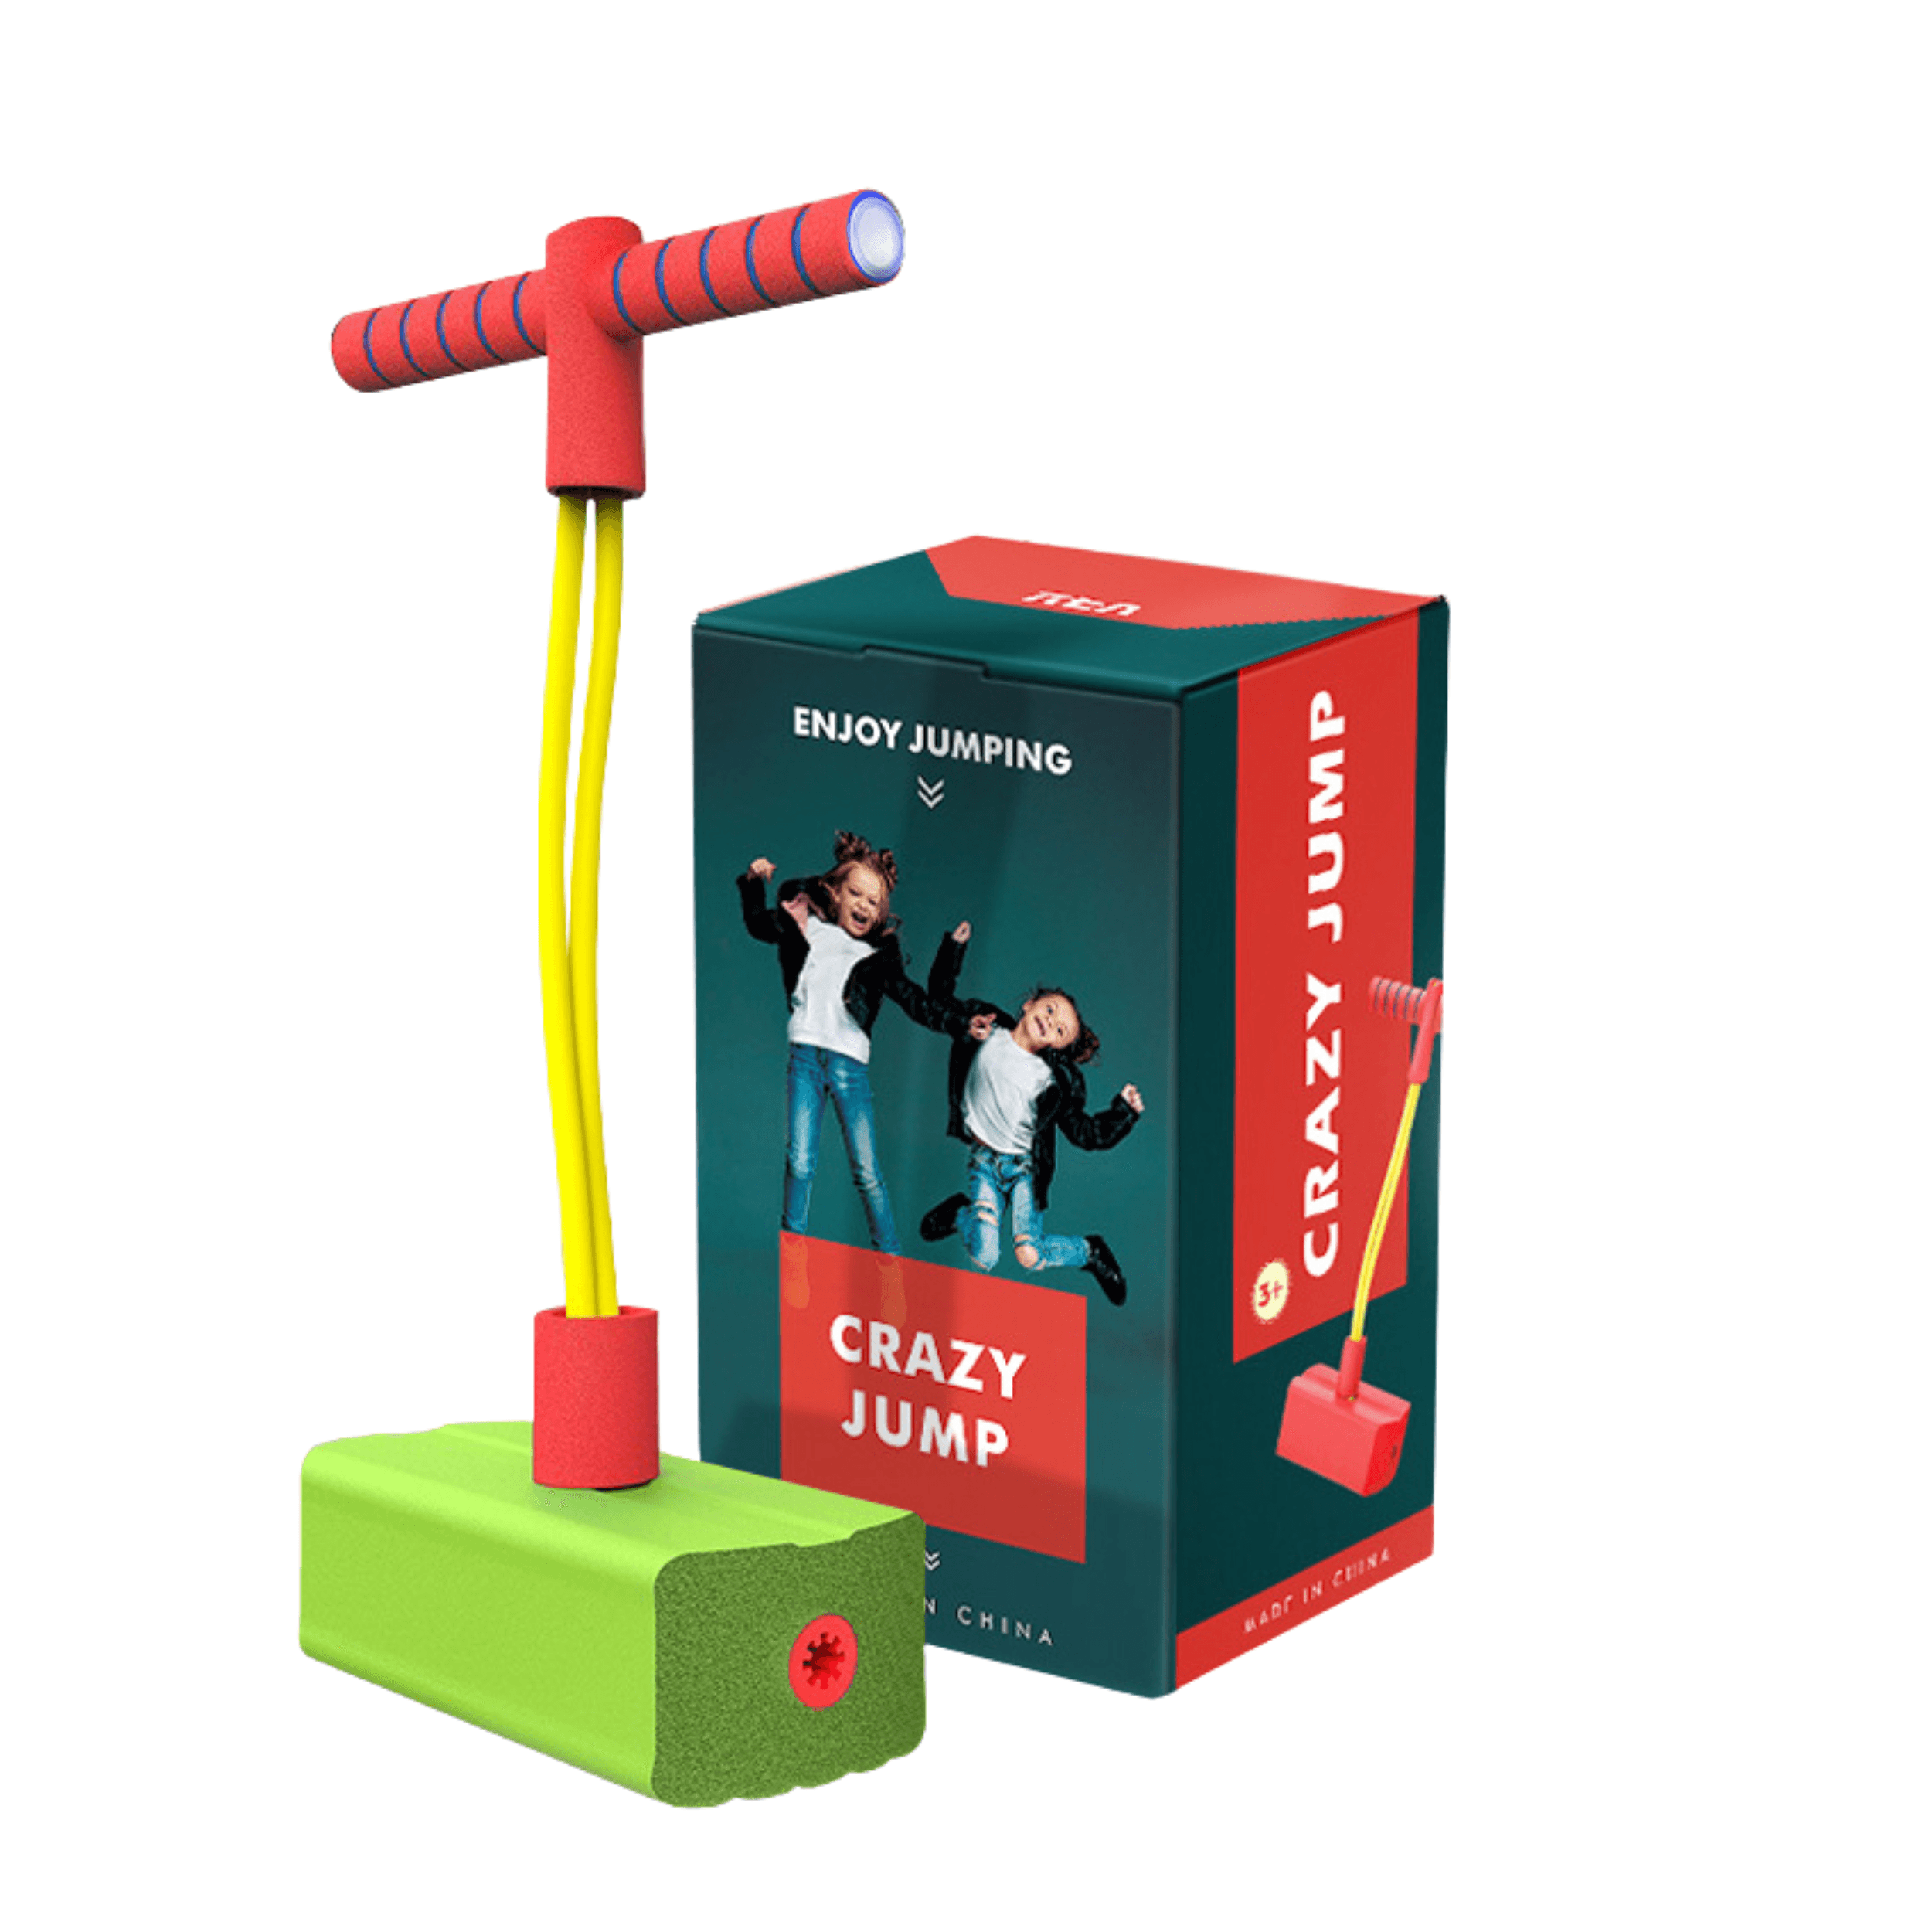 Pogo Jumper/Kids' Fun Foam Jumping Stick - green